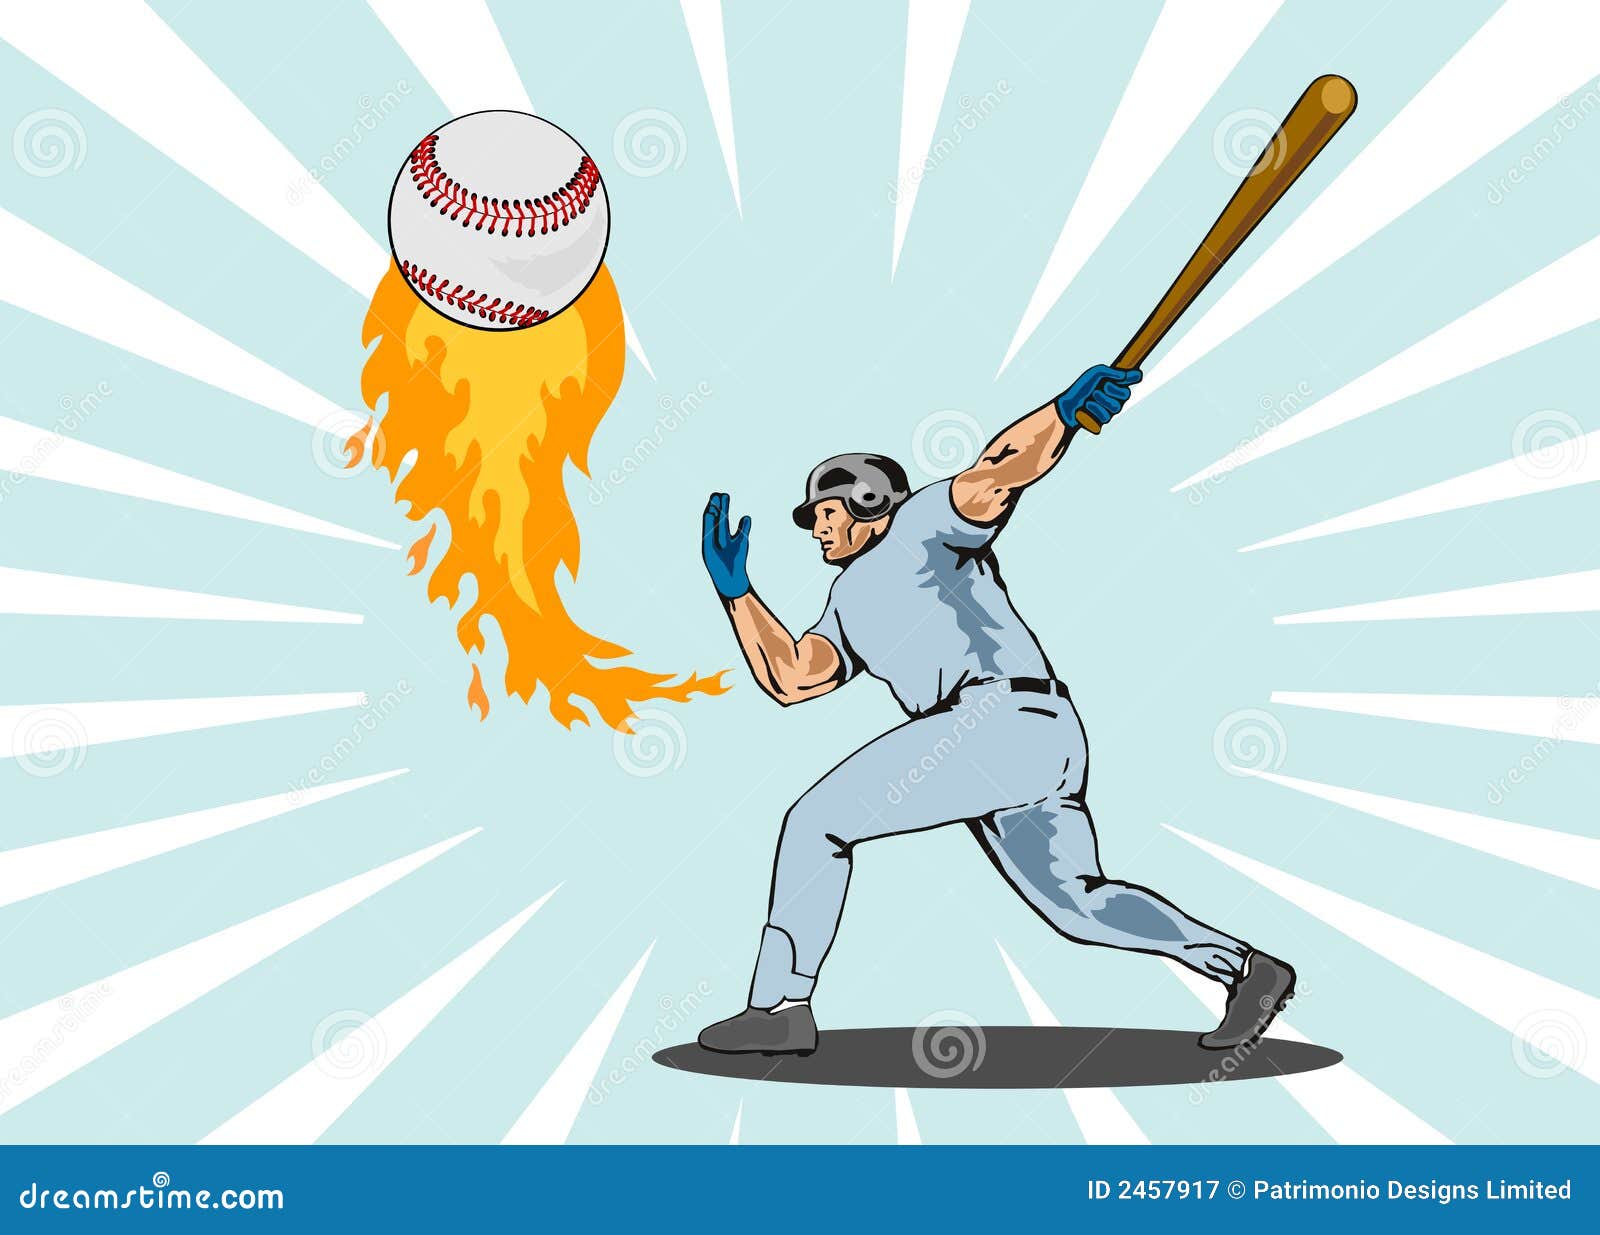 baseball-player-batting-ball-2457917.jpg